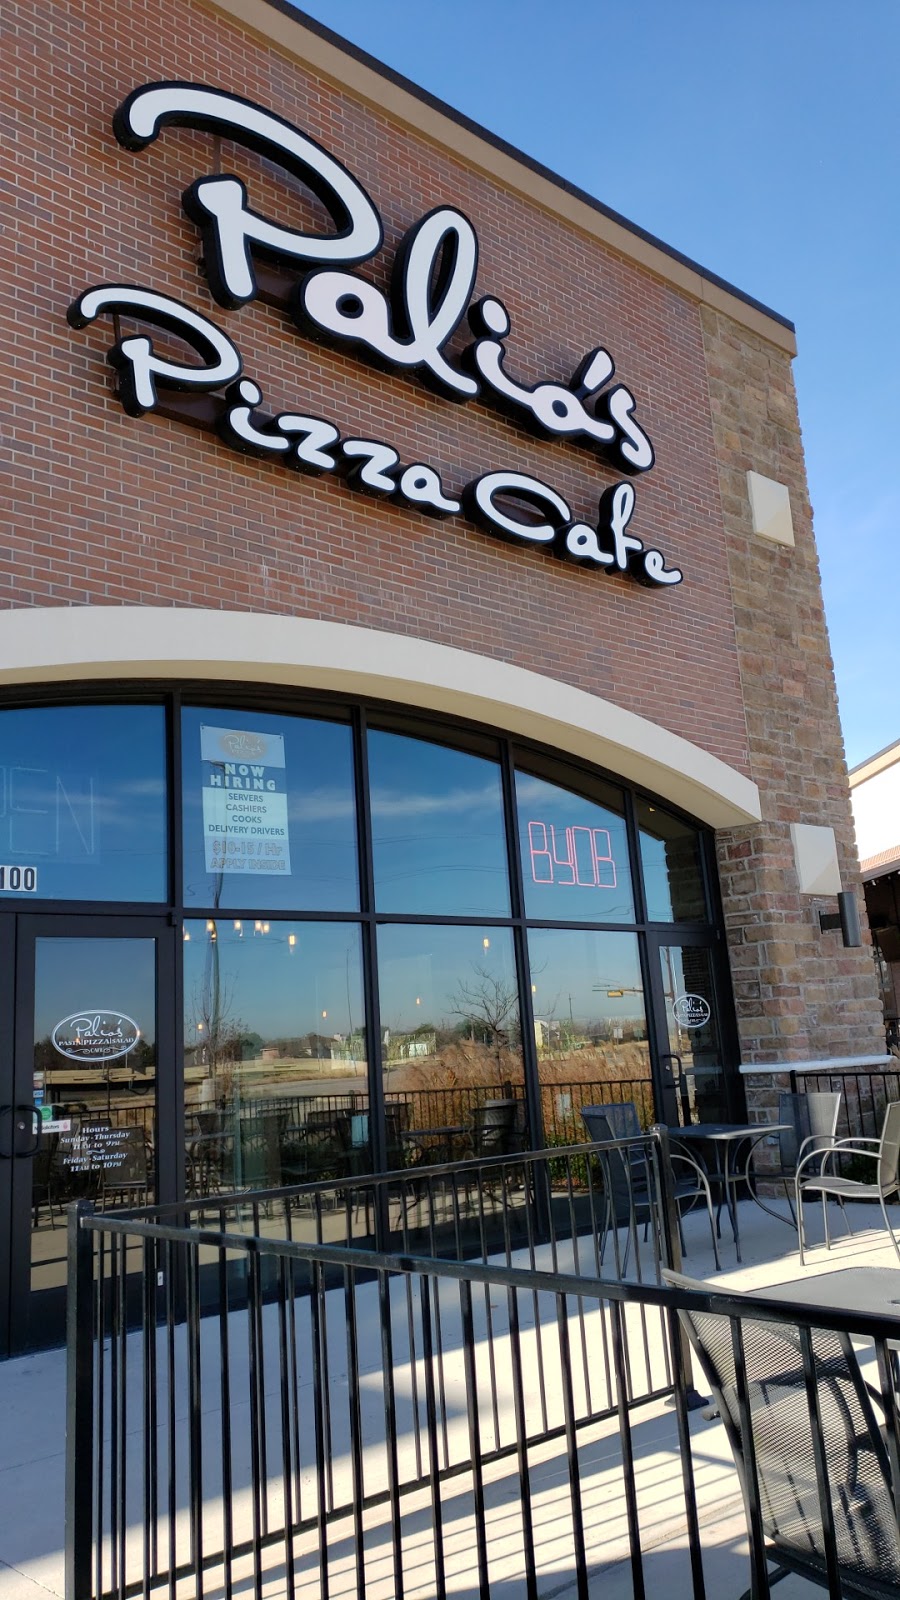 Palios Pizza Cafe | 860 TX-114 Ste 100, Roanoke, TX 76262, USA | Phone: (817) 767-5221